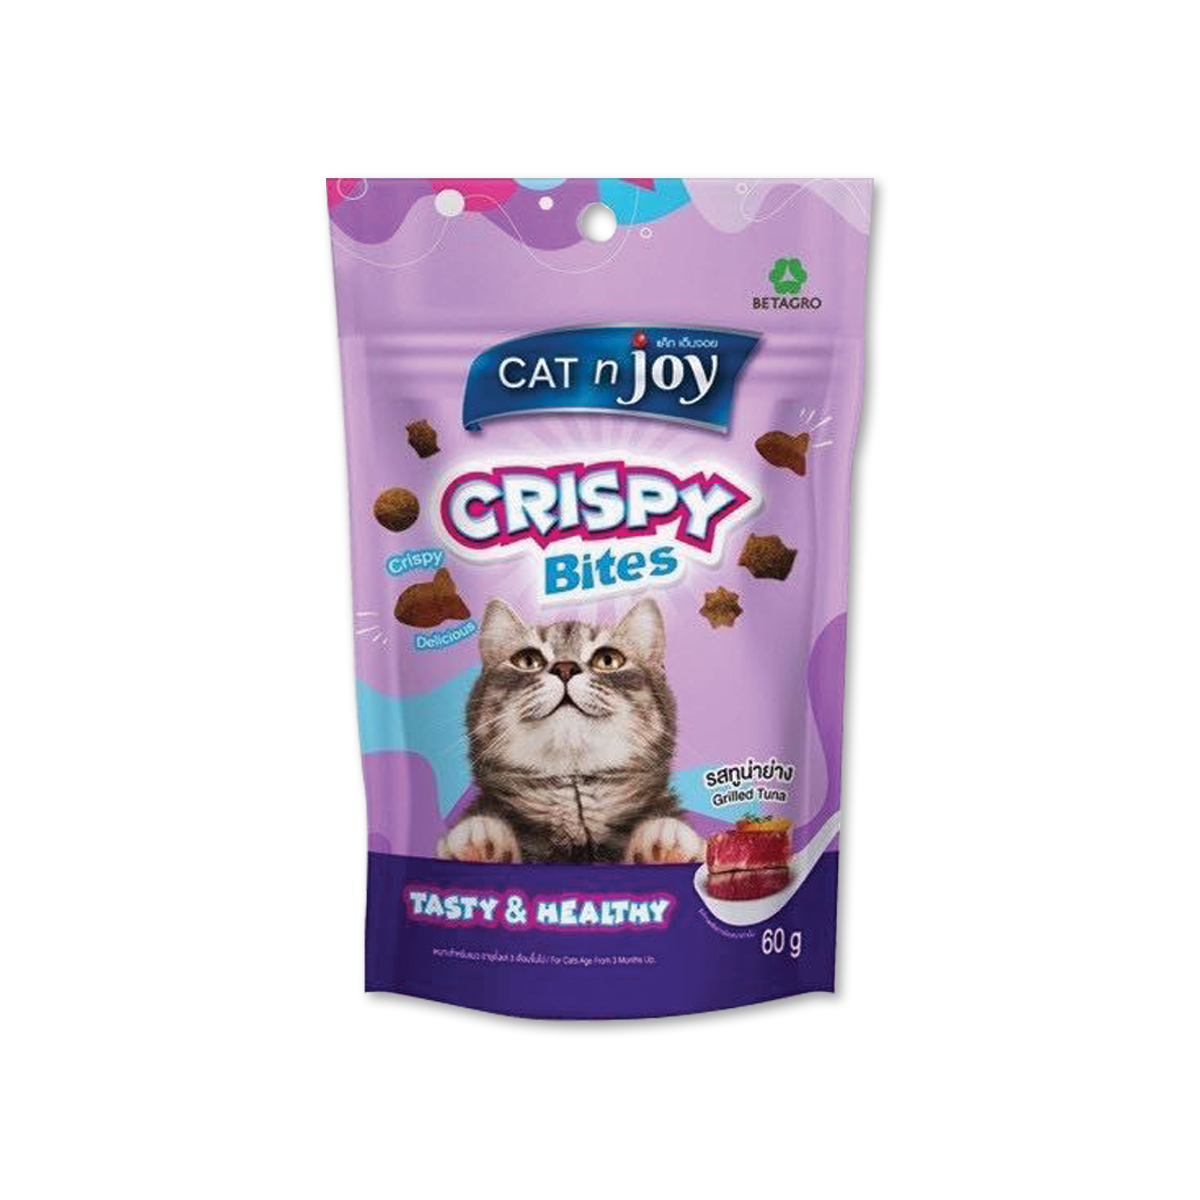 Cat'njoy Crispy Bites Cat Snack Grilled Tuna Flavor แค็ทเอ็นจอย คริสปี้ไบทส์ ขนมสำหรับแมว รสทูน่าย่าง ขนาด 60 กรัม